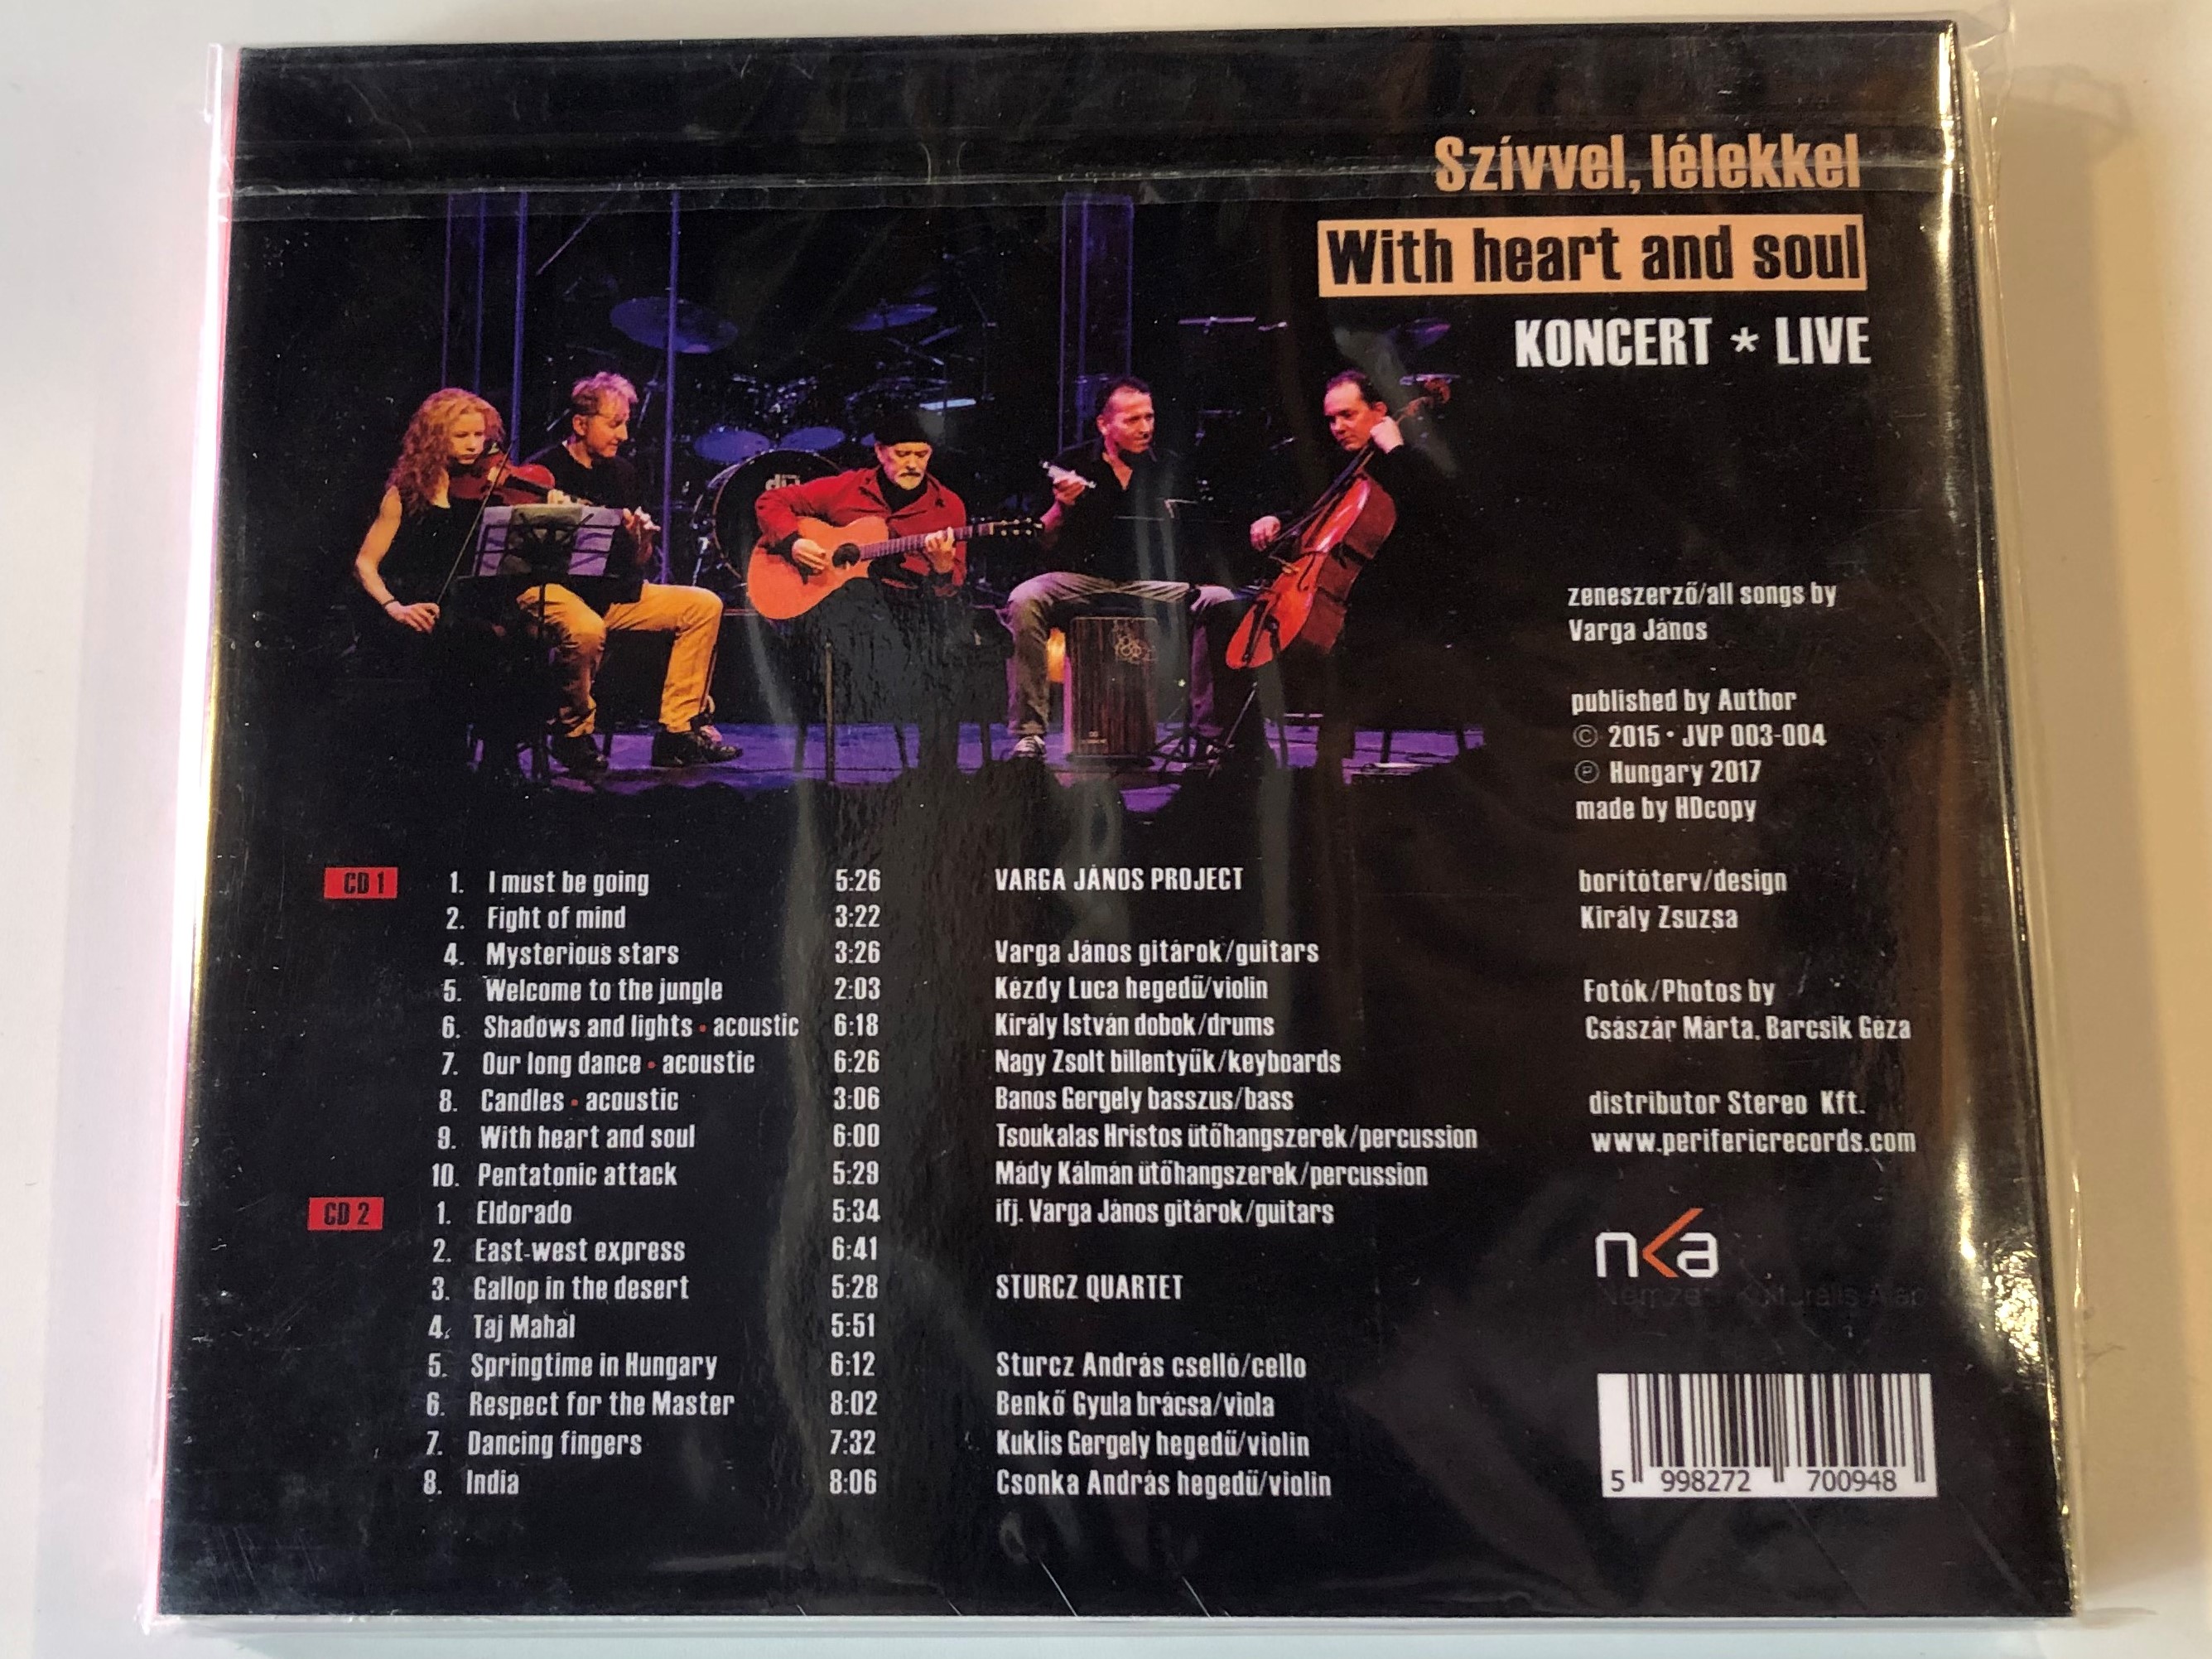 sz-vvel-l-lekkel-with-heart-and-soul-varga-janos-61-koncert-live-2x-audio-cd-2015-jvp-003-004.jpg